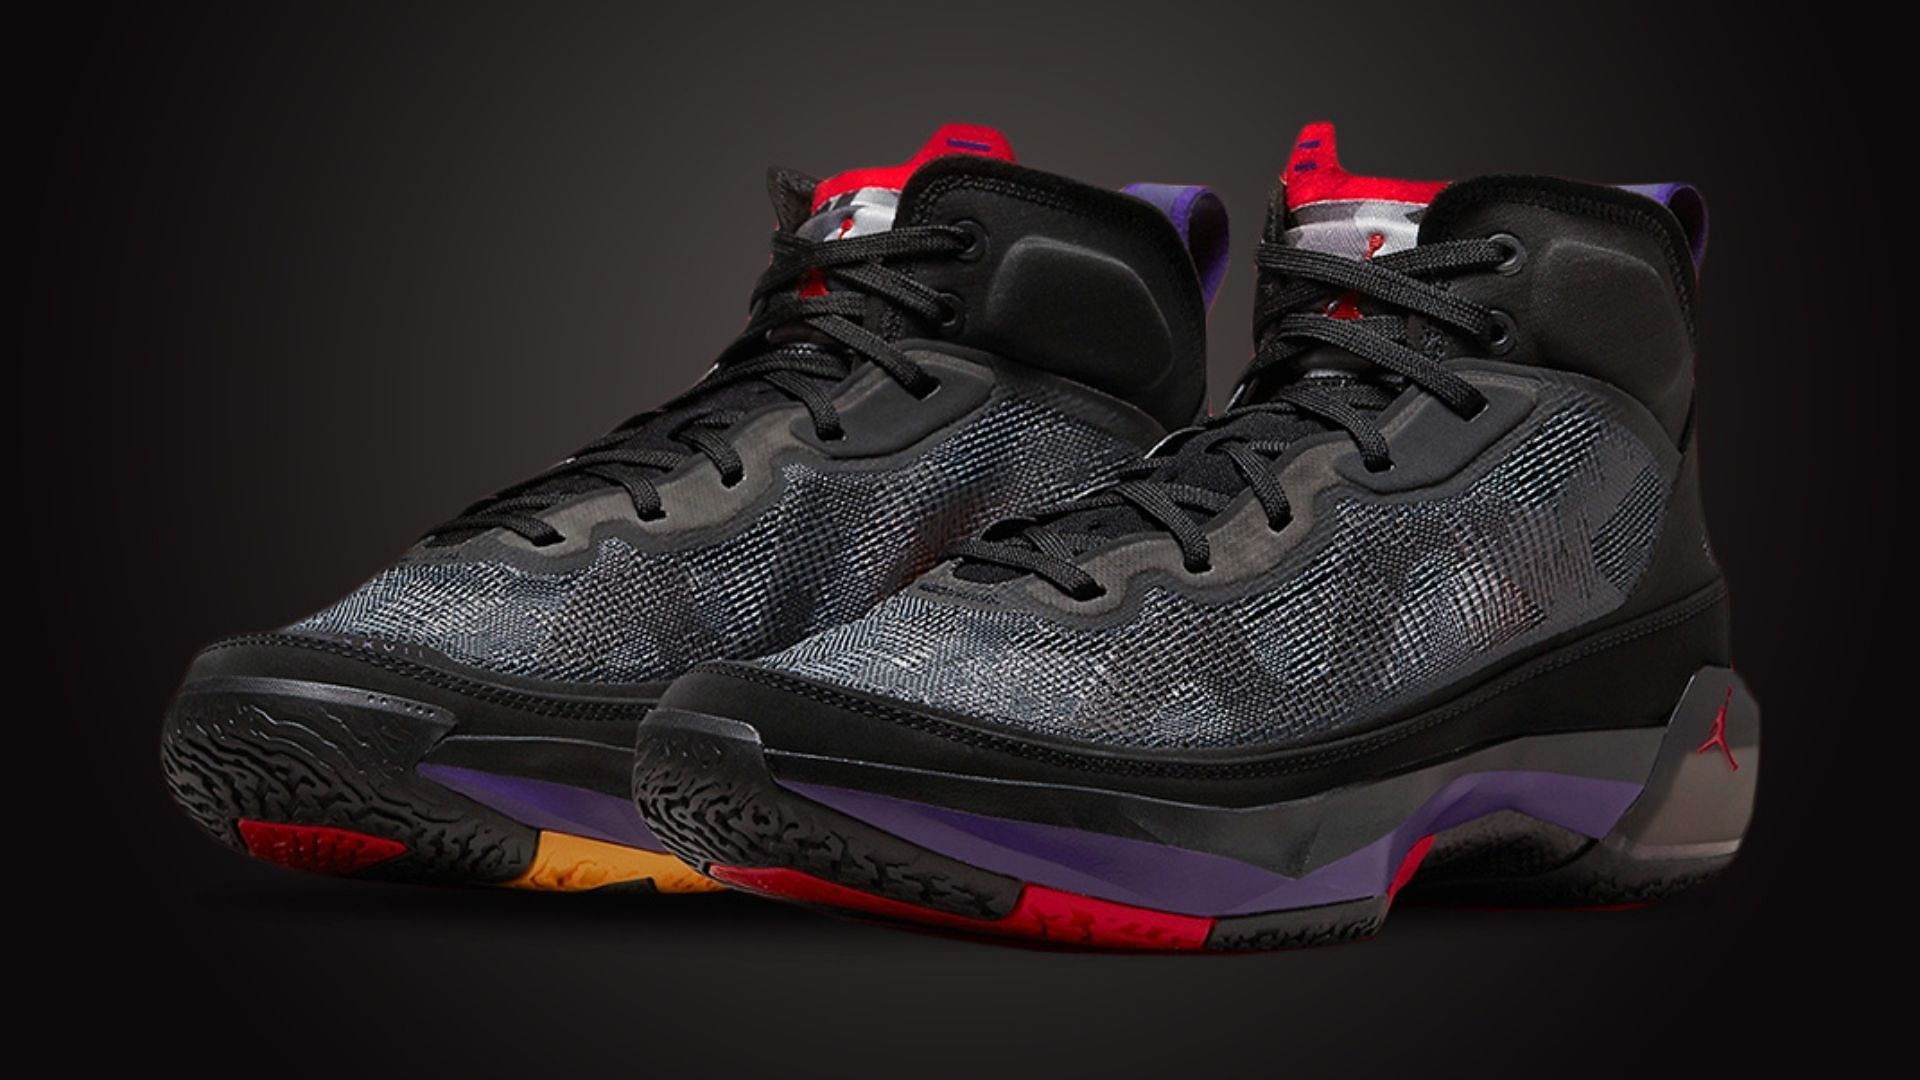 Air Jordan 37 Raptors colorway (Image via Nike)